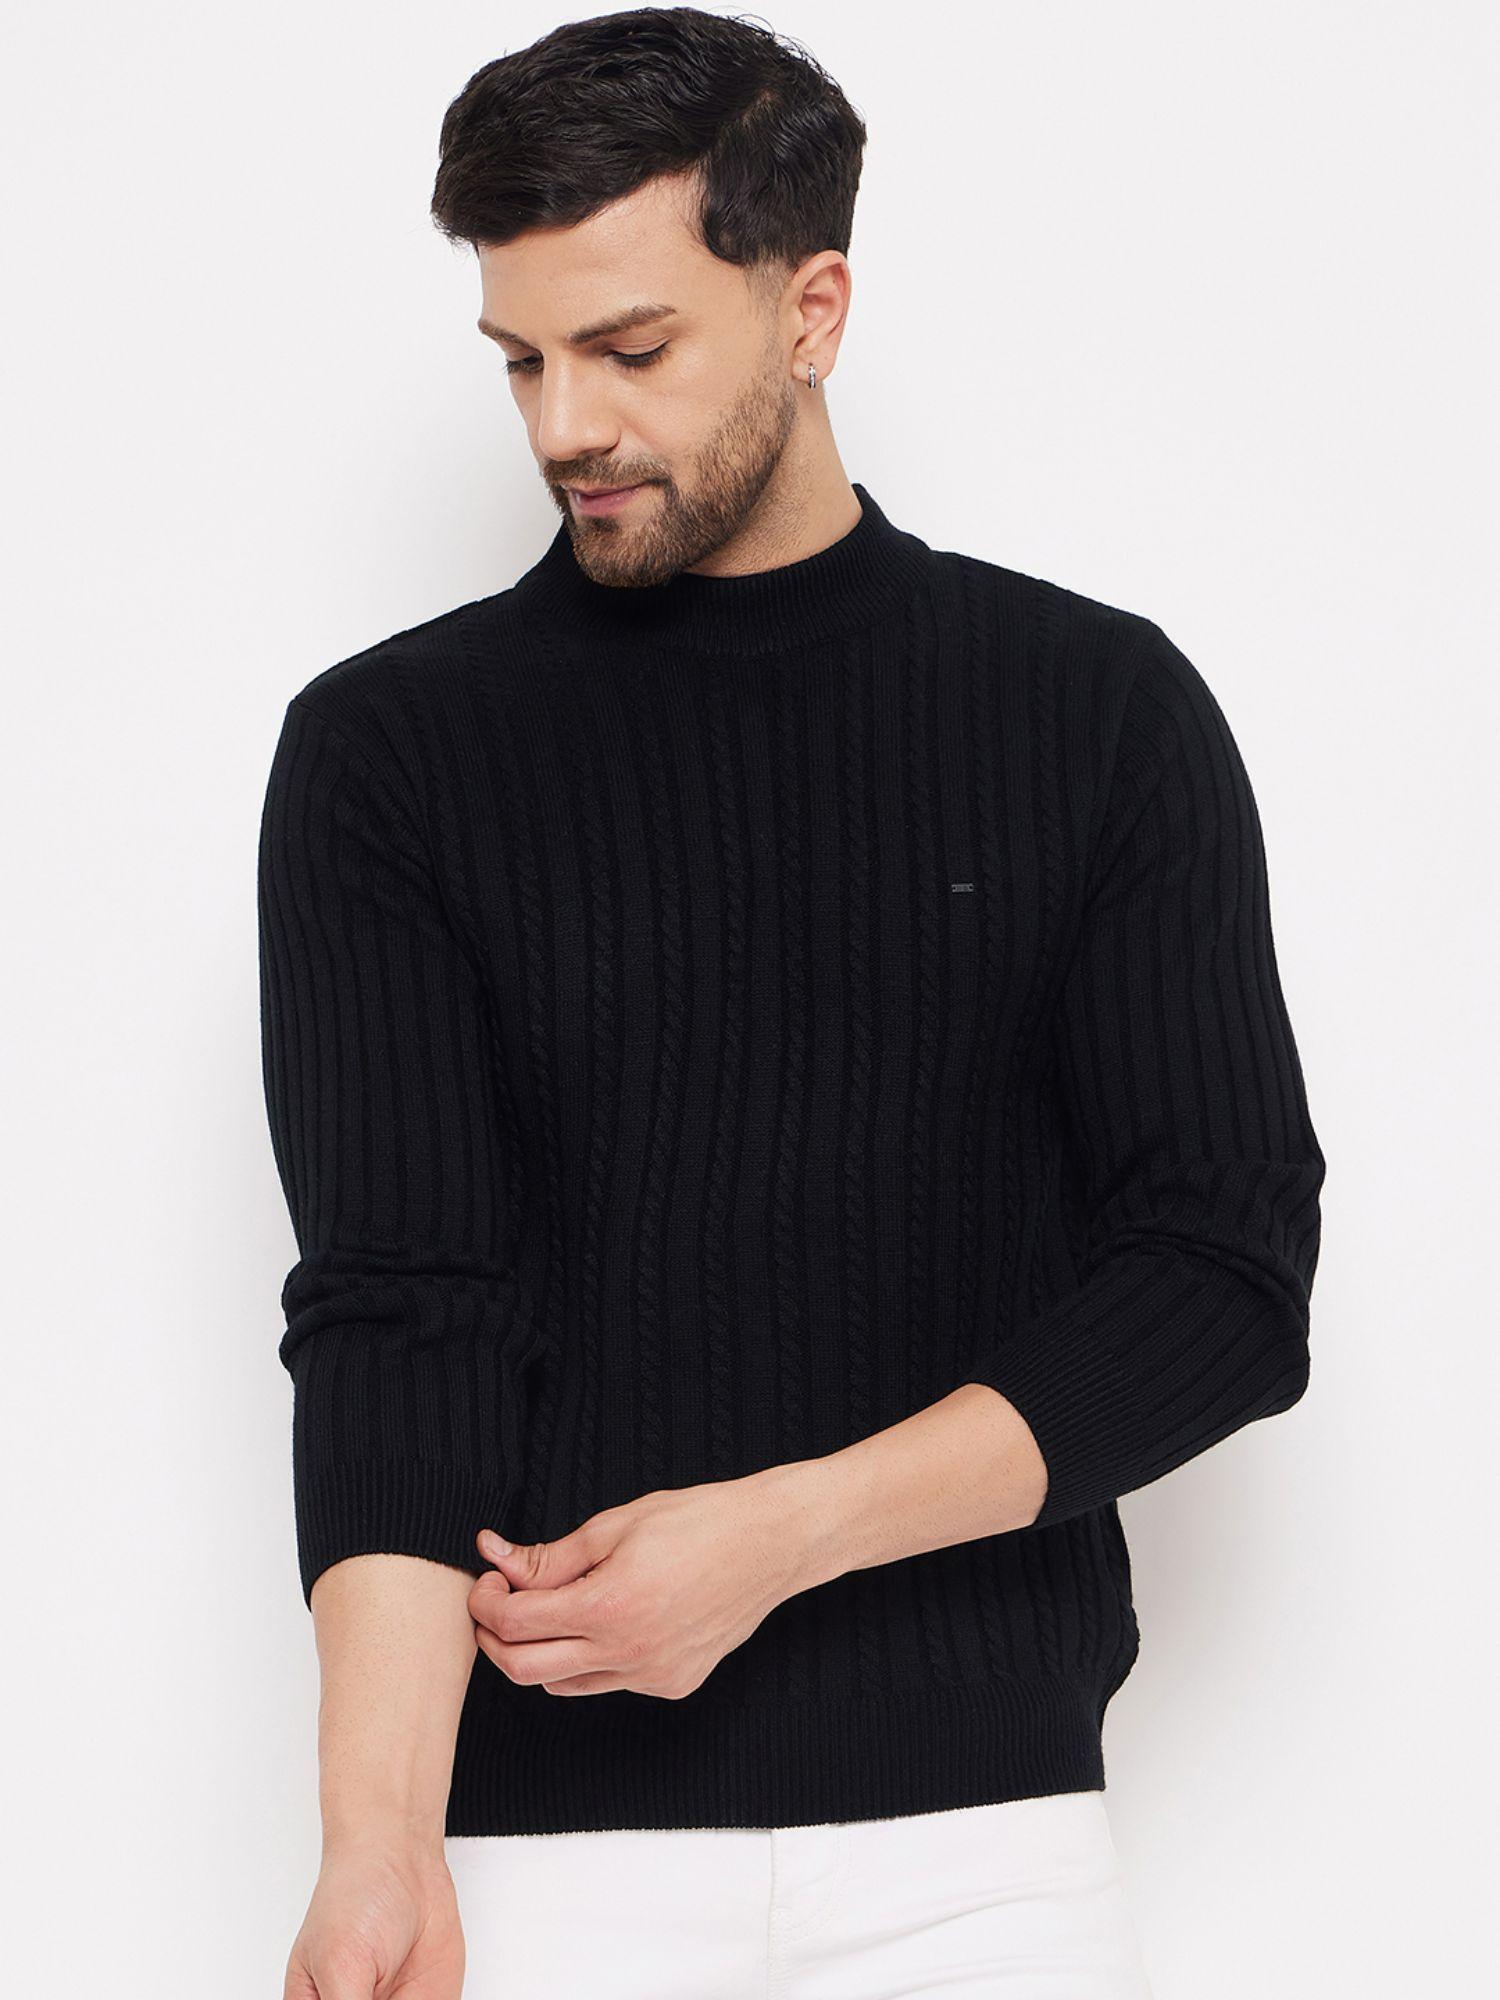 black-acrylic-sweater